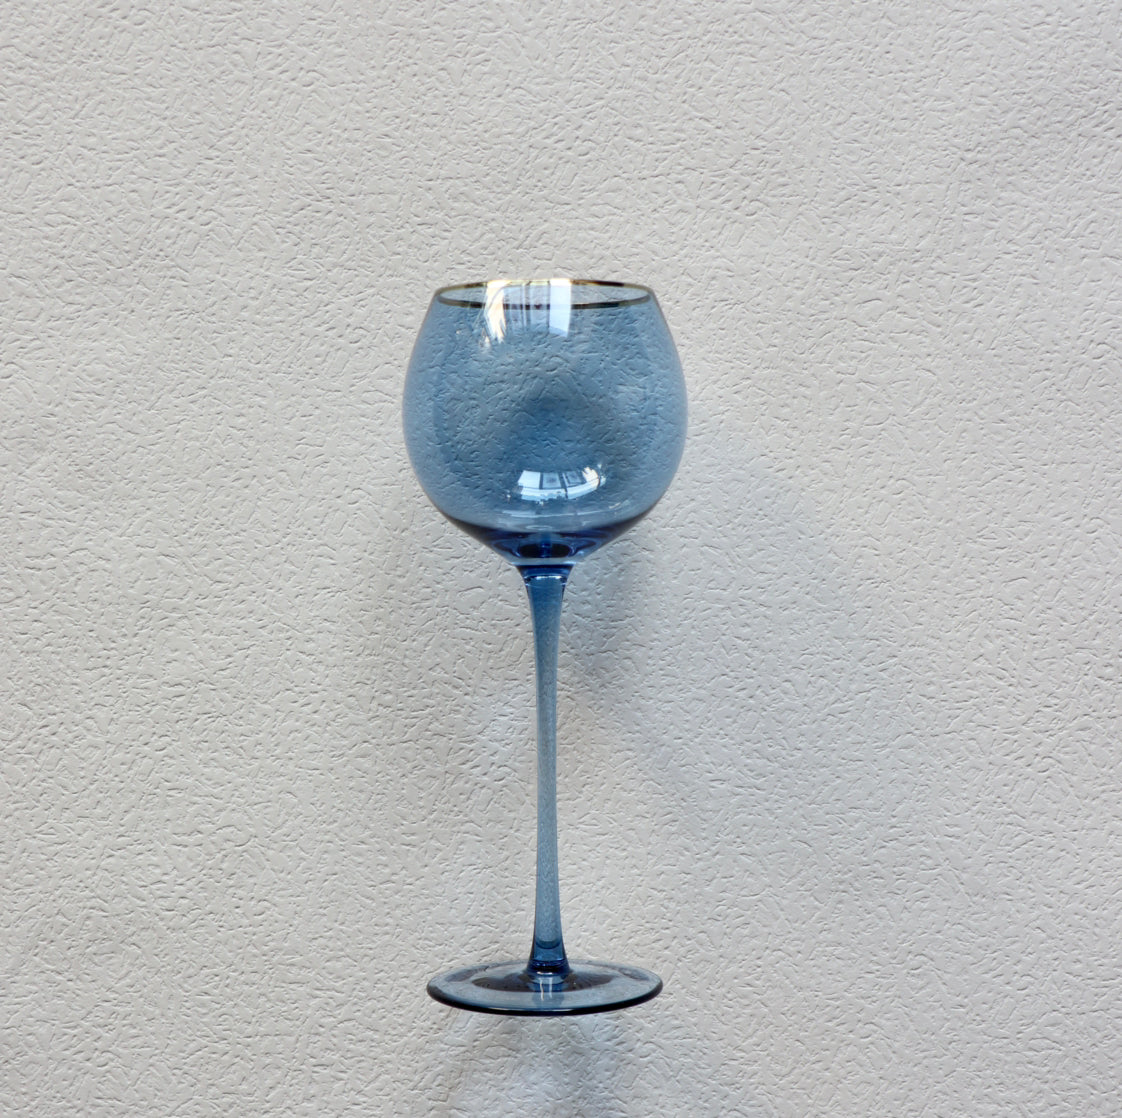 Vikko Decor Platinum Gold Rimed Ball Wine Glass, 17 oz, Set Of 6 - Assorted Colors